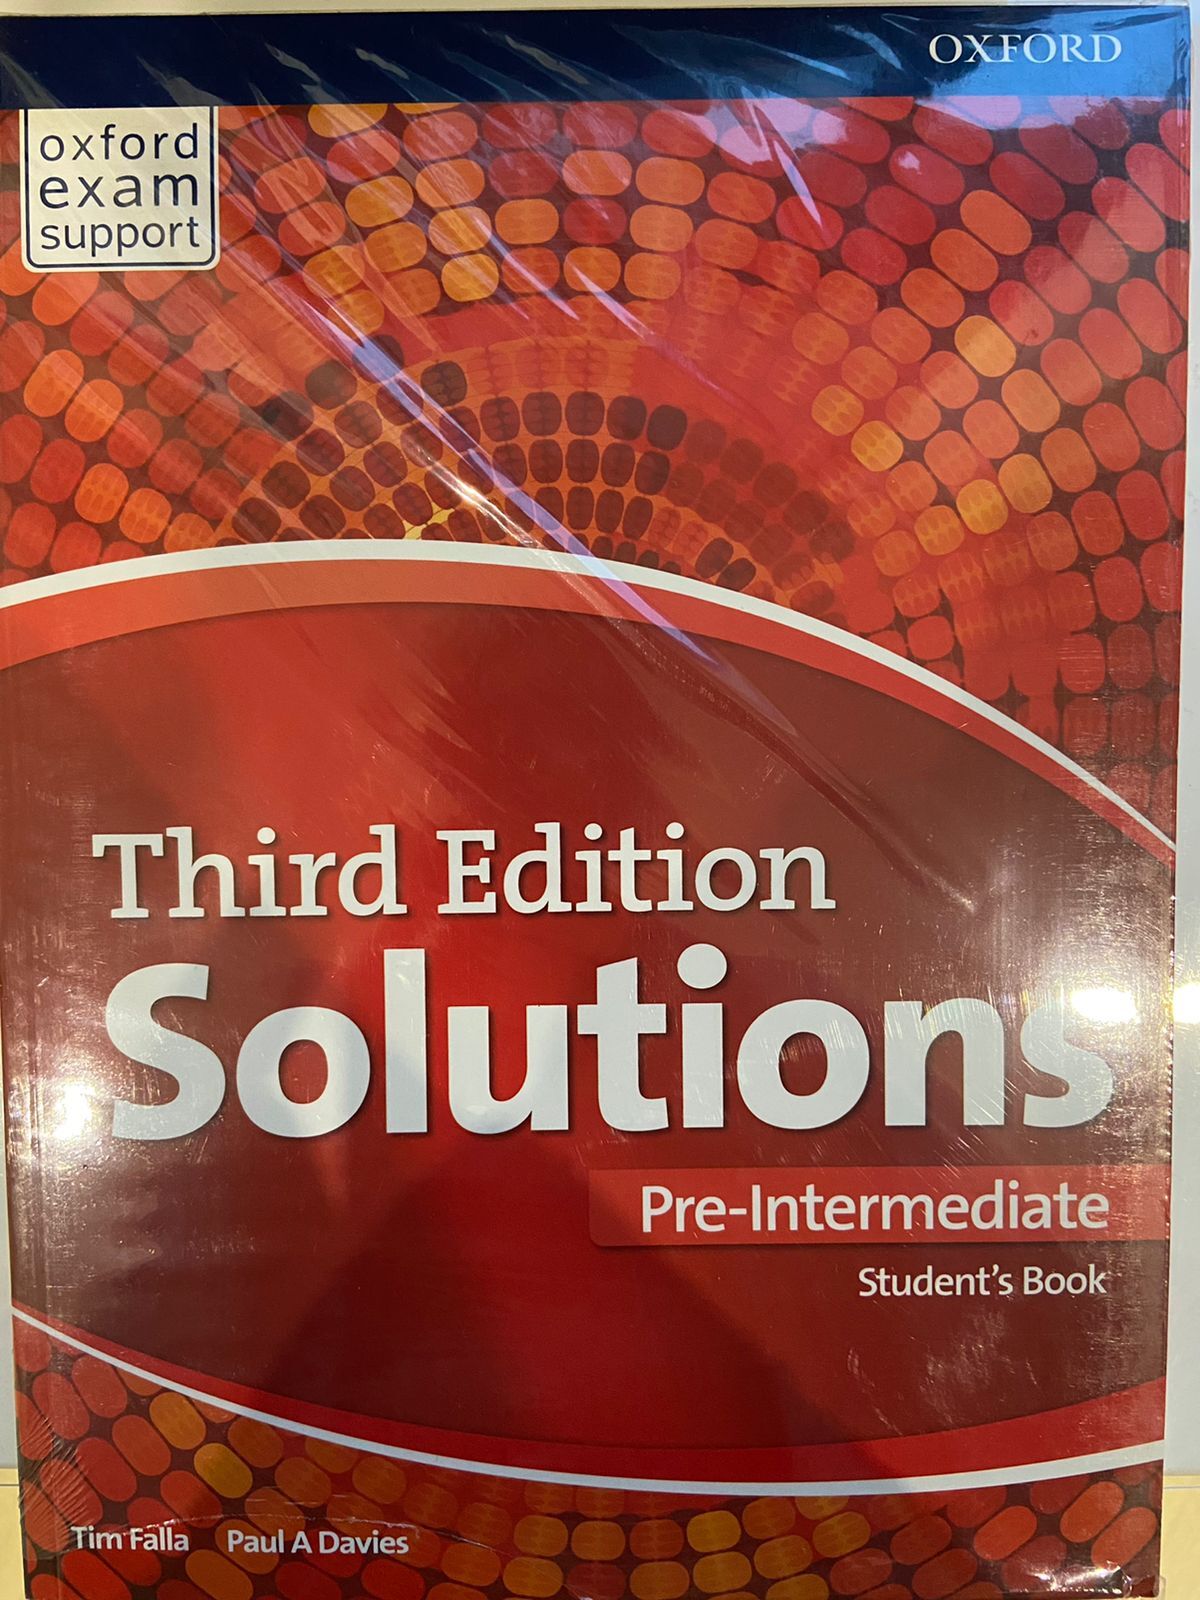 Solutions 3 edition tests. Солюшенс пре интермедиат 3 издание. Solutions pre-Intermediate 3 Edition. Third Edition solutions. Учебник third Edition solutions.